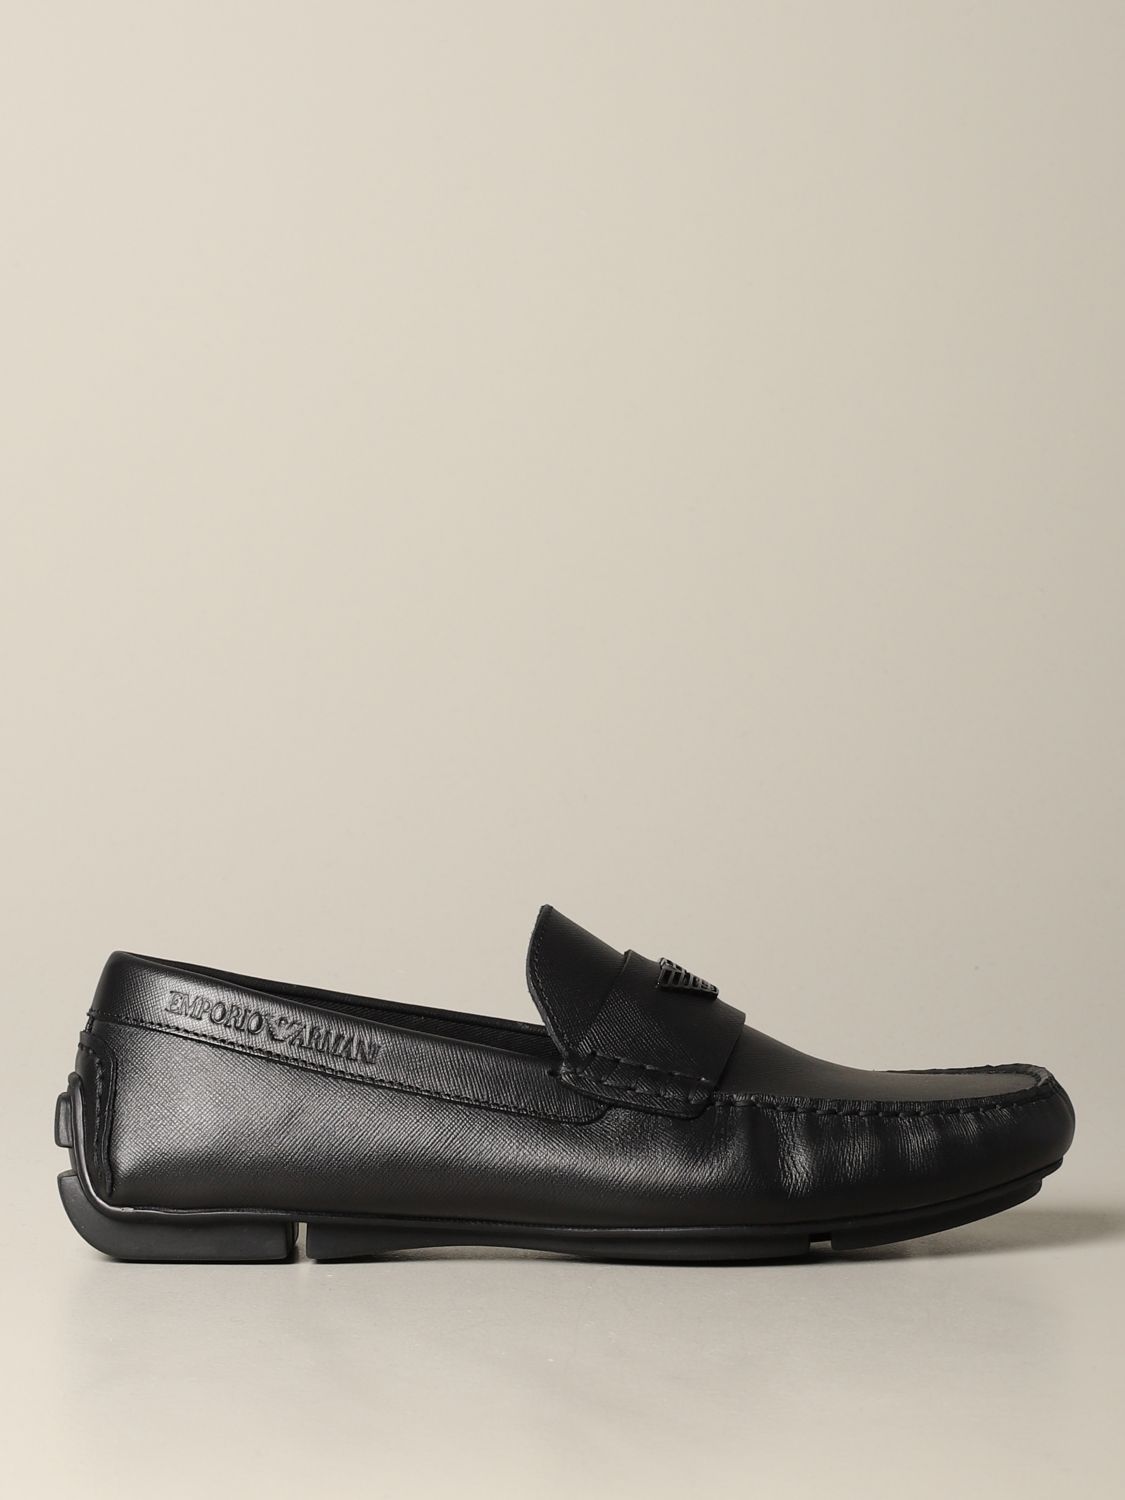 Emporio Armani Drive loafer in leather 